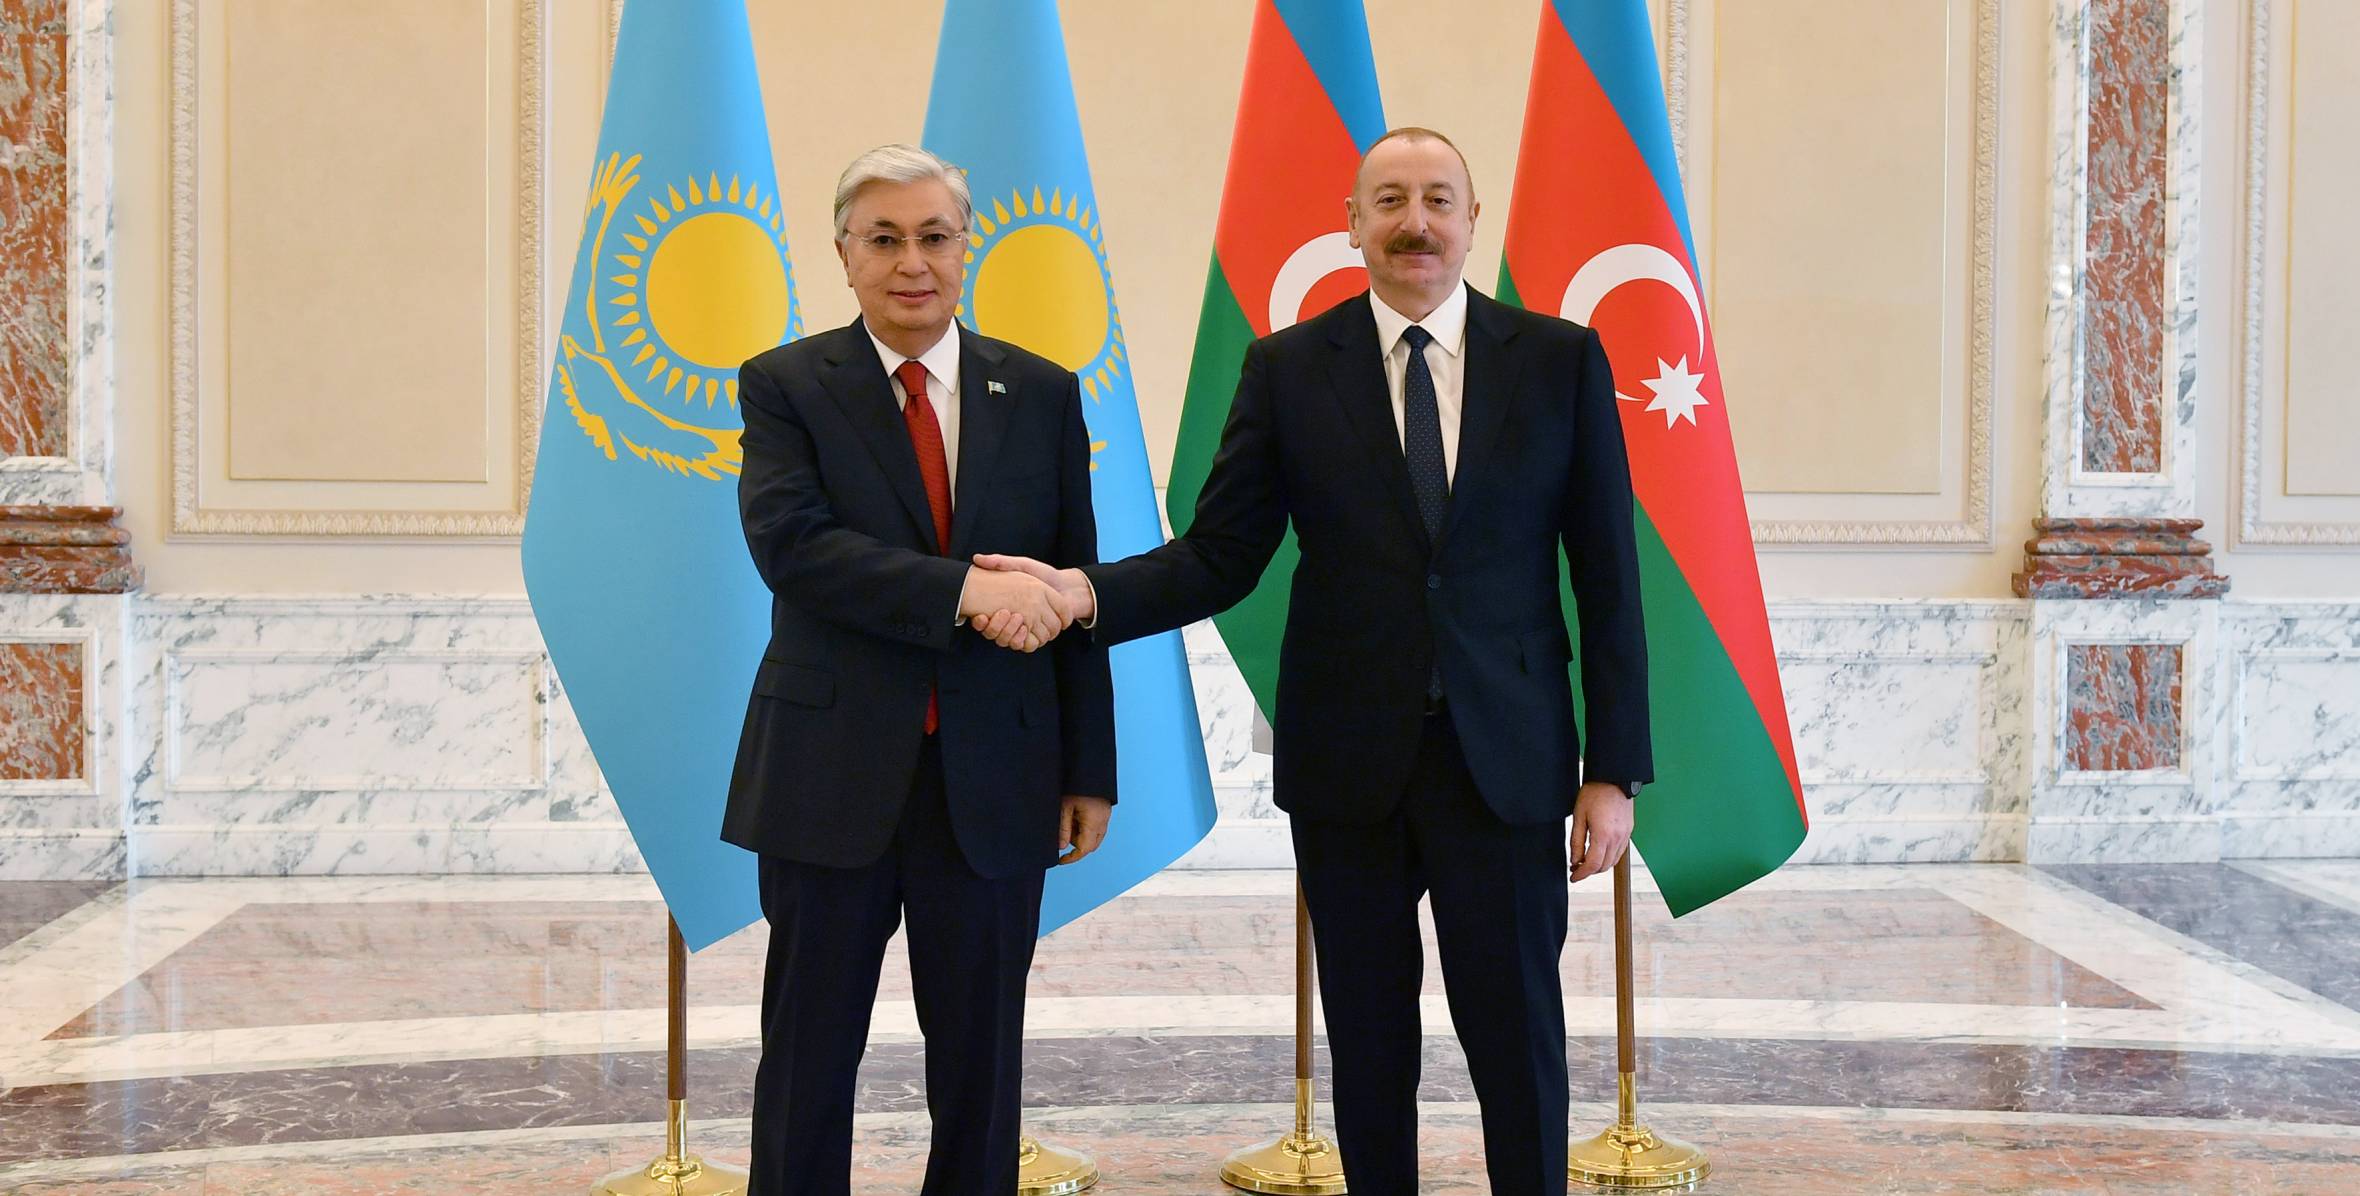 Ilham Aliyev met with President of Kazakhstan Kassym-Jomart Tokayev